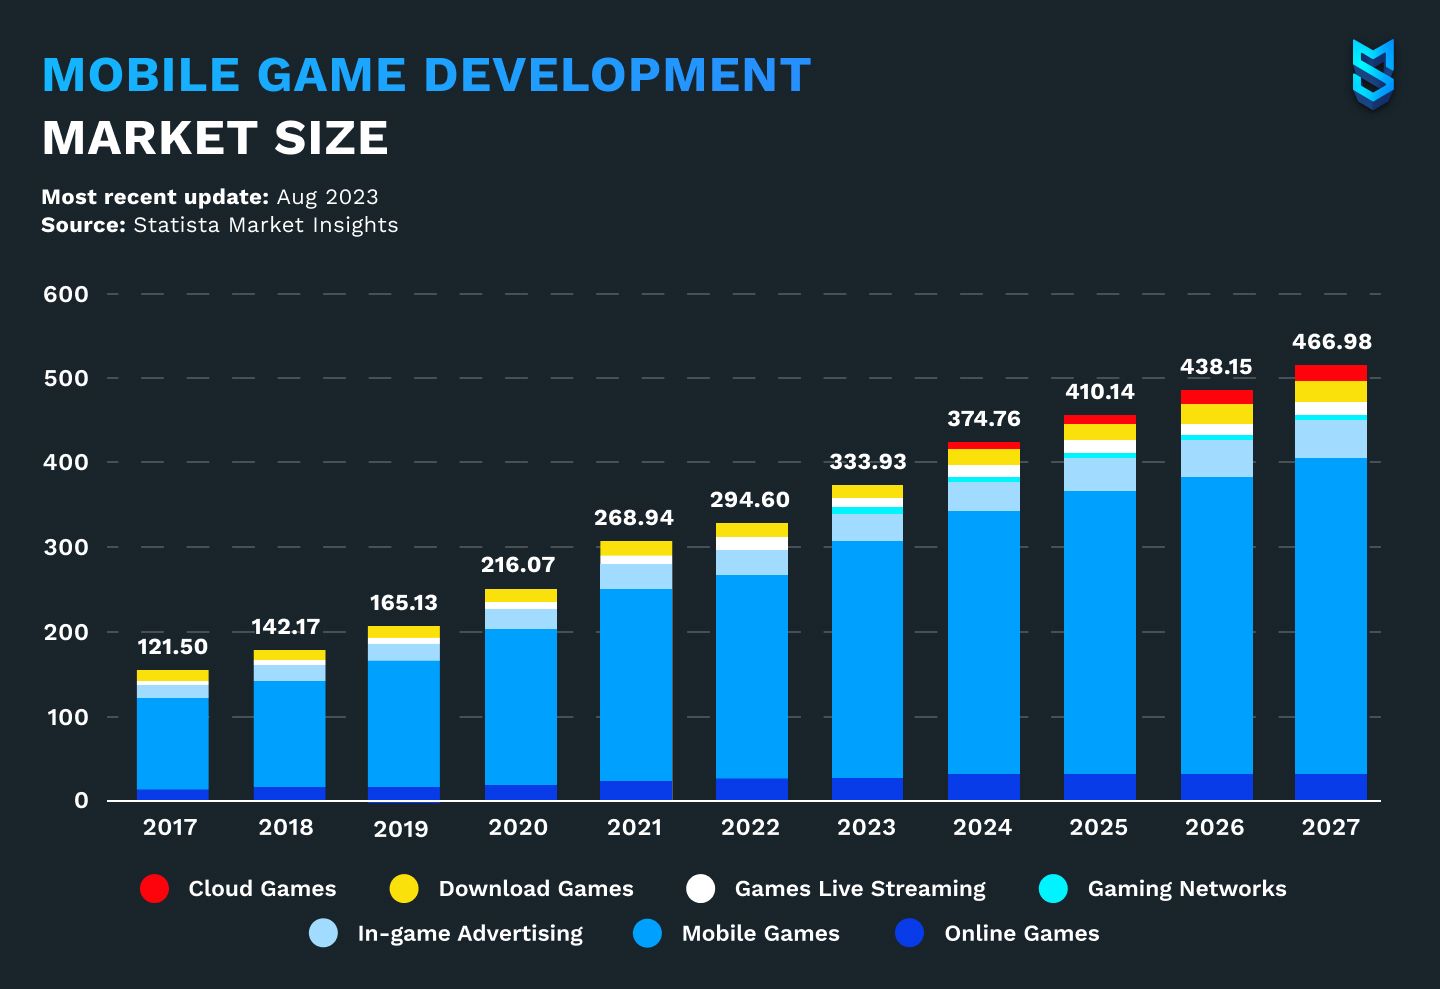 Mobile game development market size